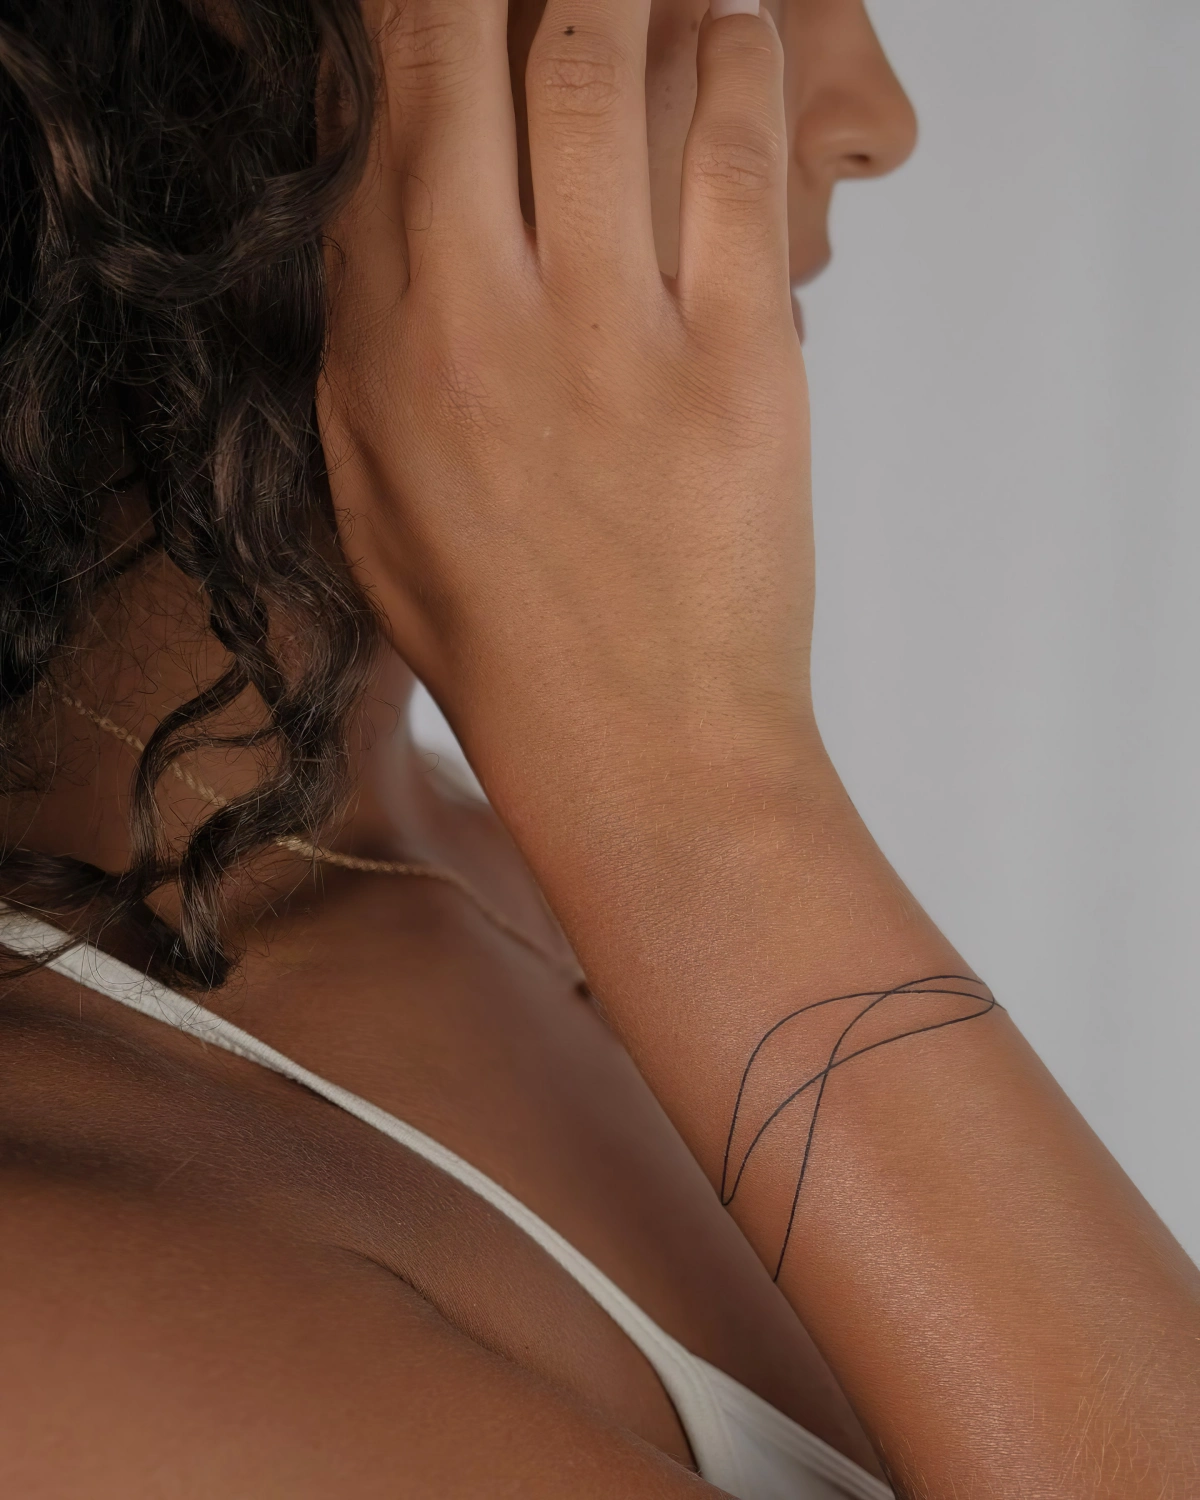 cheveux frises tatouage bracelet fin dessin peau minimaliste debardeur blanc